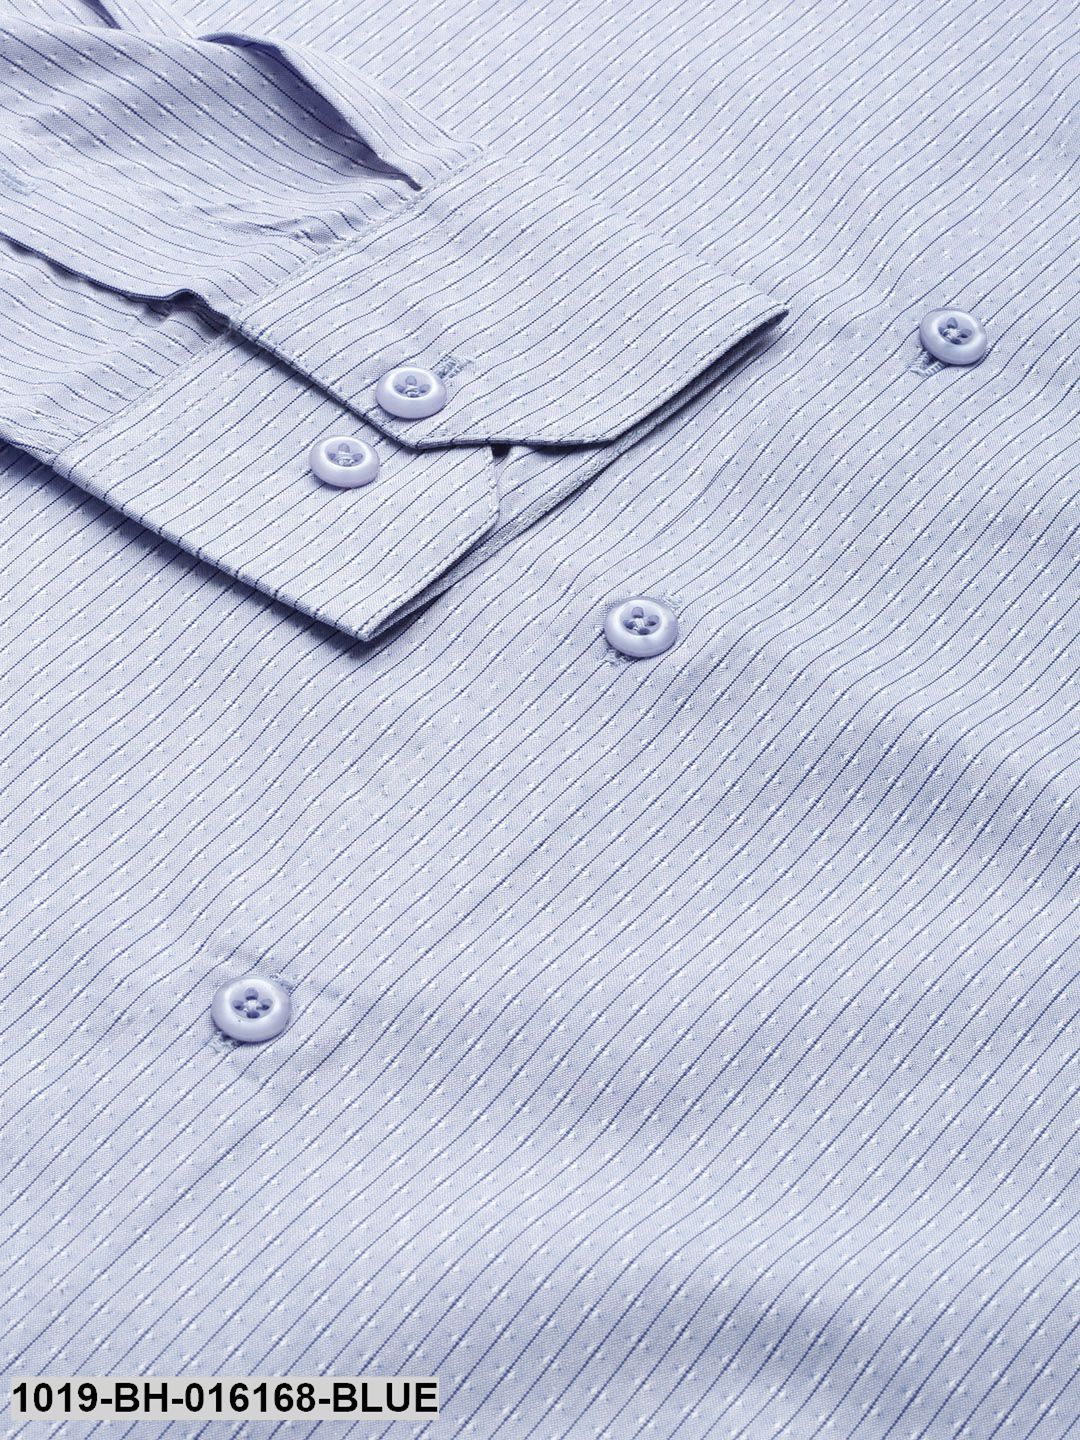 Men's Cotton Blue & Navy Blue Striped Formal Shirt - Sojanya